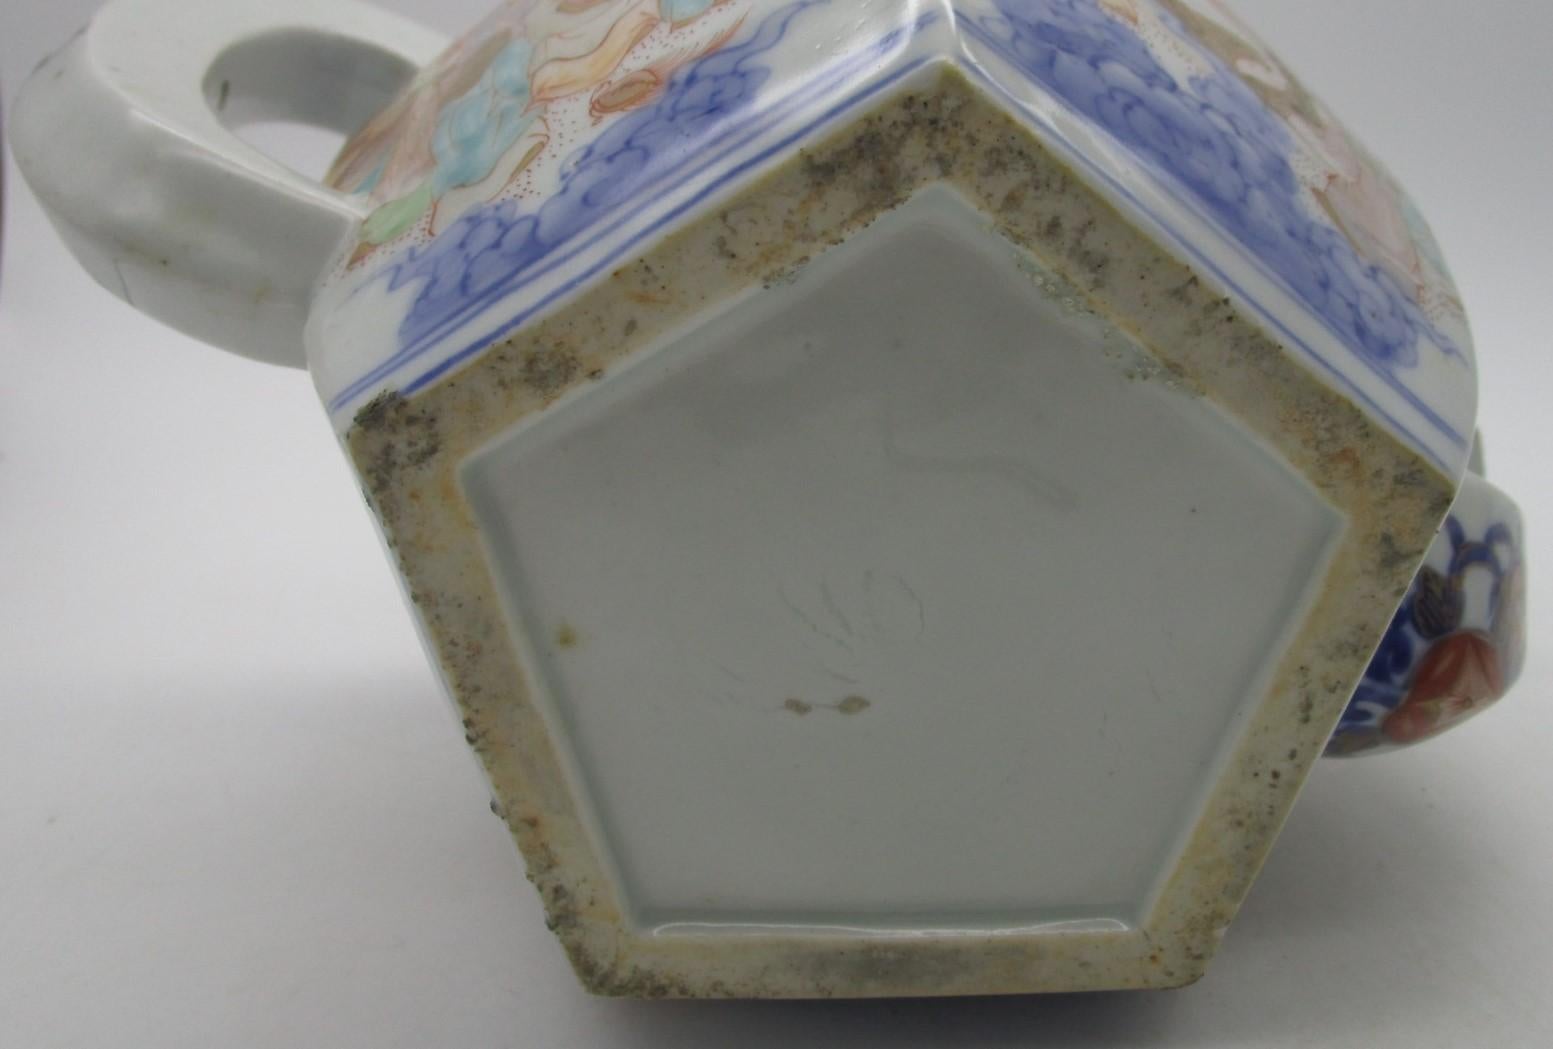 Gilt Japanese Meiji Koransha Blue Red Gold Porcelain Tea Pot, circa 1880 For Sale